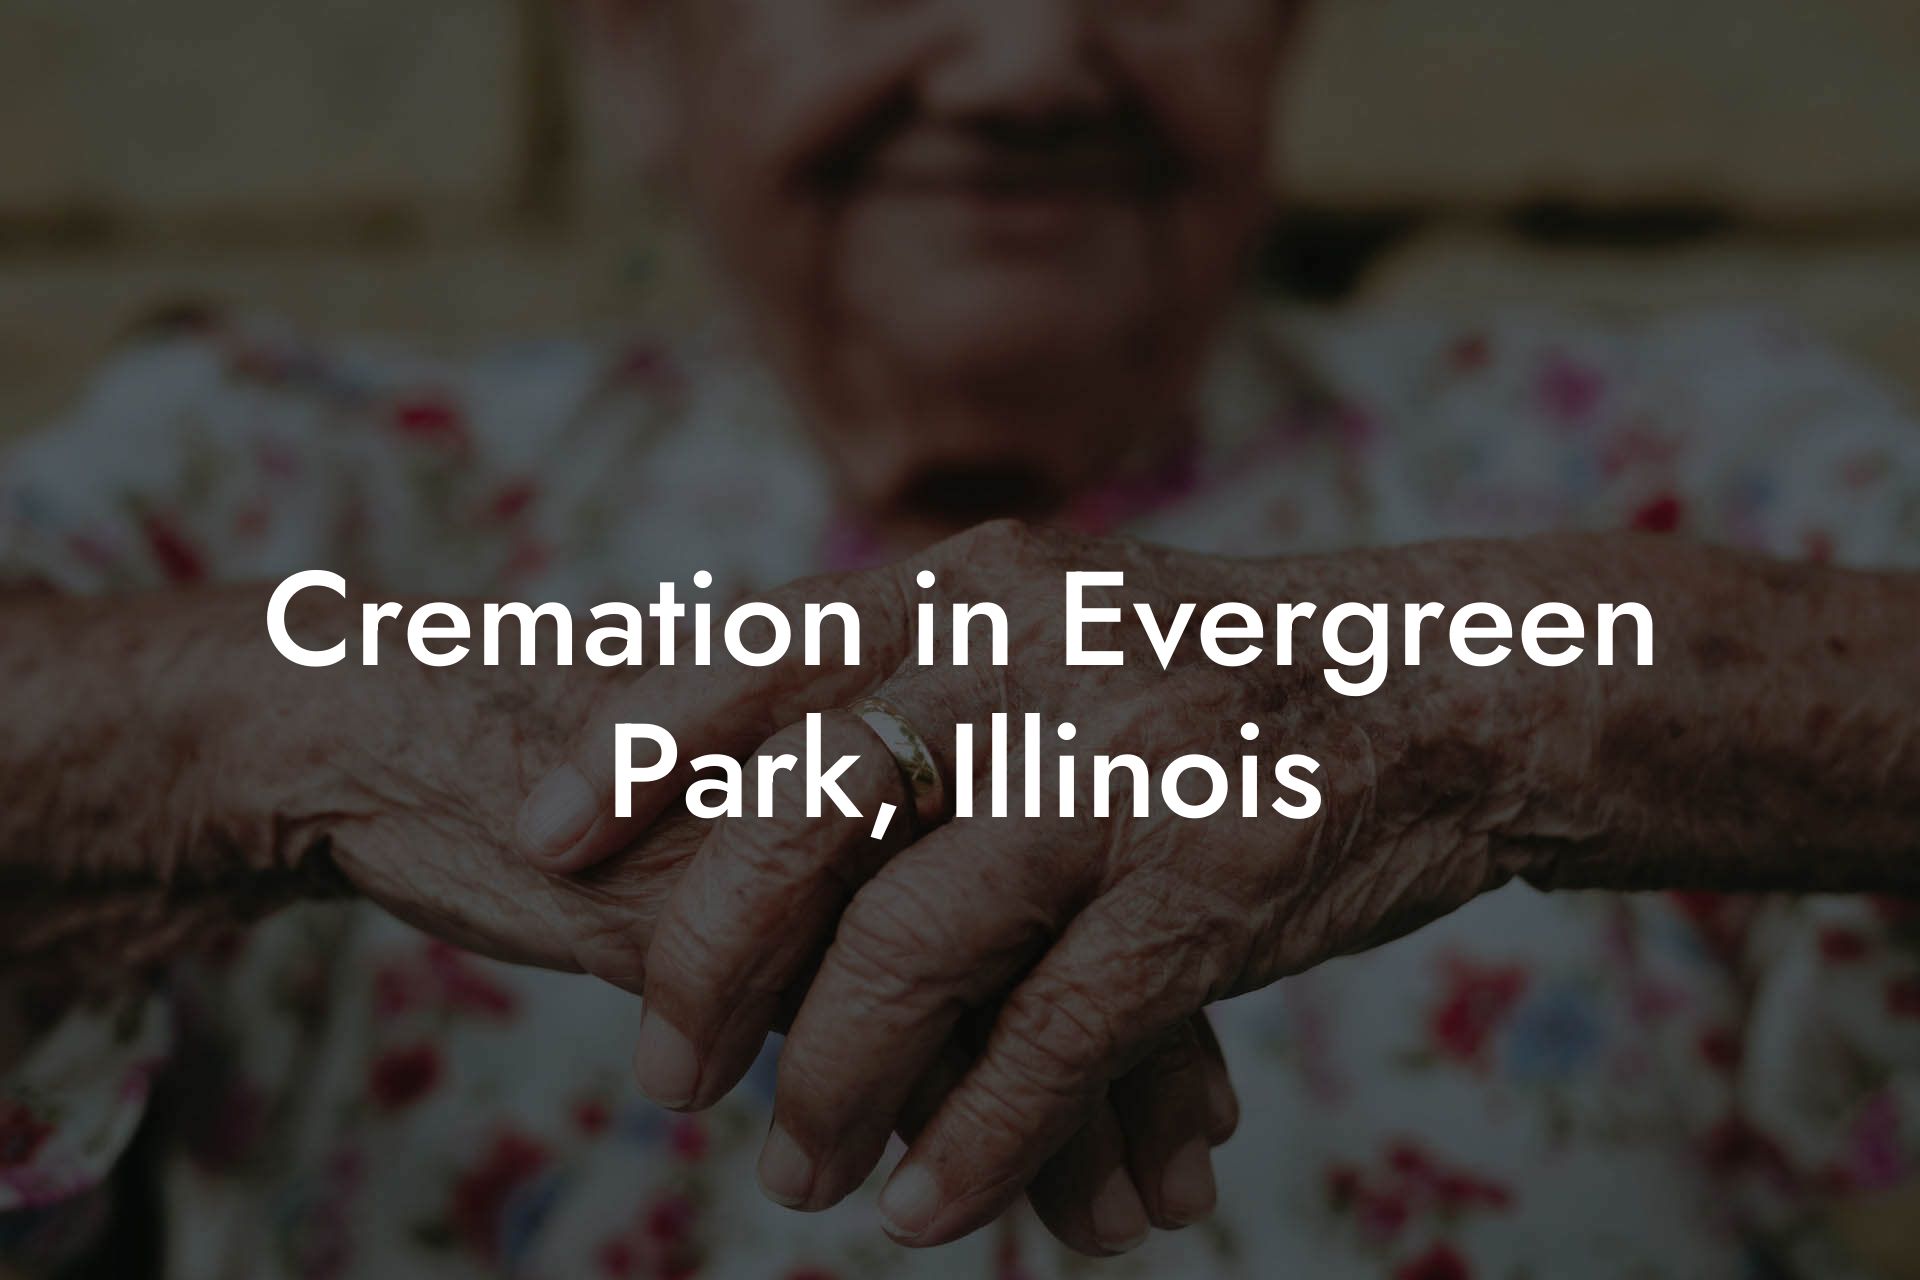 Cremation in Evergreen Park, Illinois